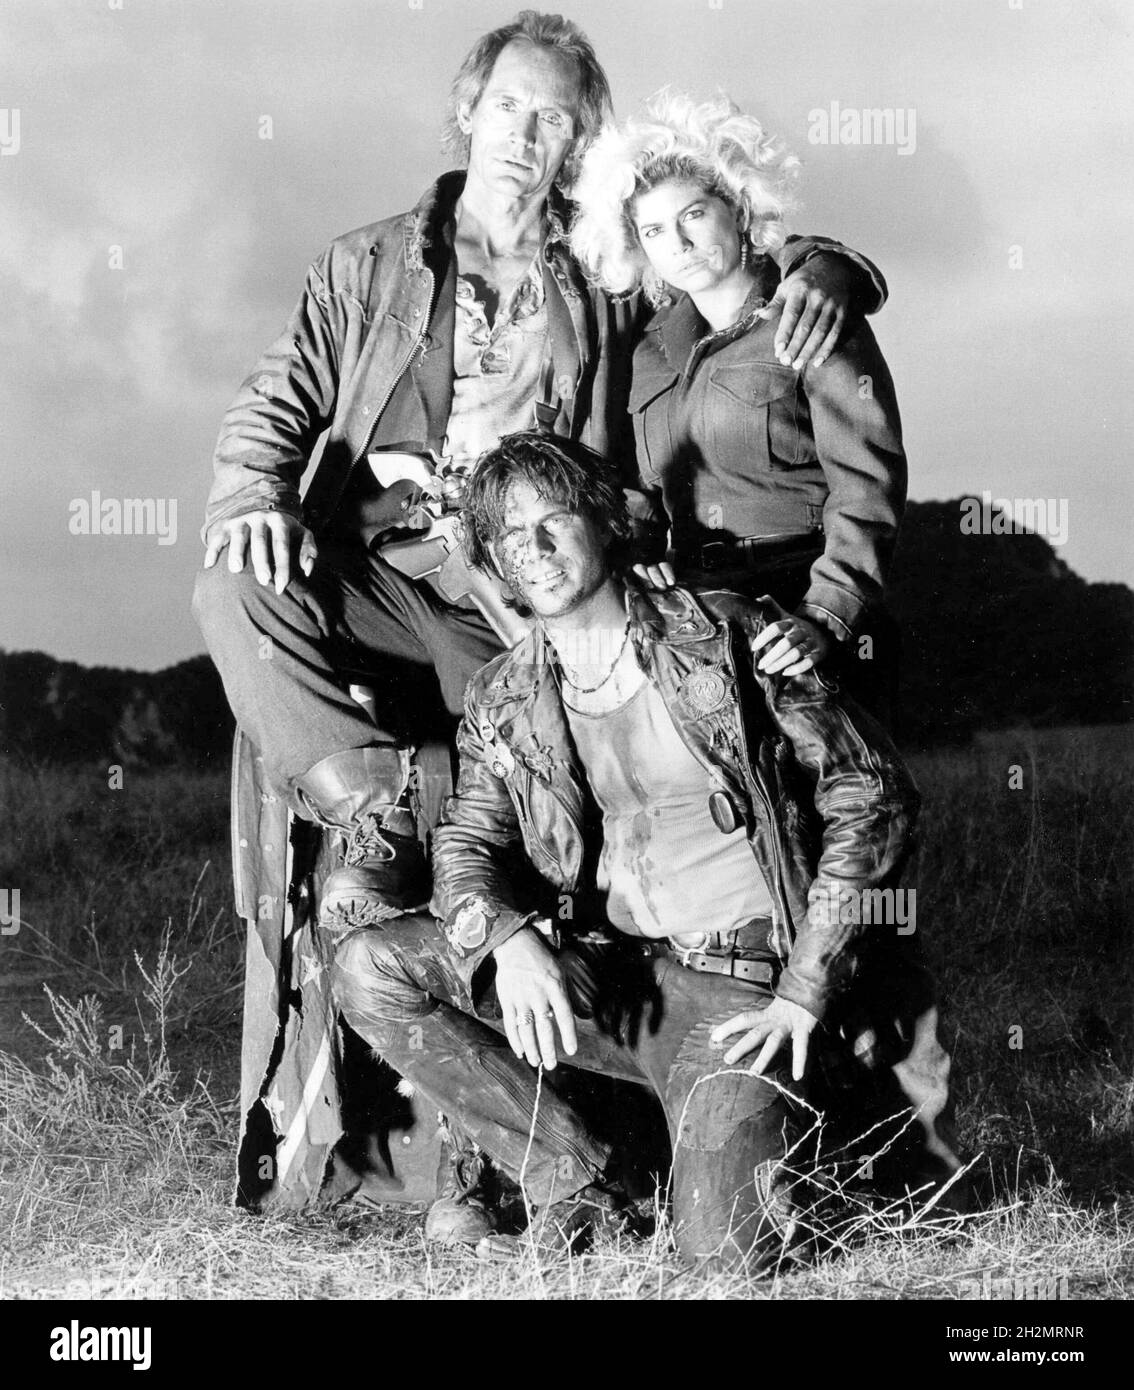 LANCE HENRIKSEN, BILL PAXTON and JENNY WRIGHT in NEAR DARK (1987), directed by KATHRYN BIGELOW. Credit: F-M ENTERTAINMENT/DEG / Album Stock Photo